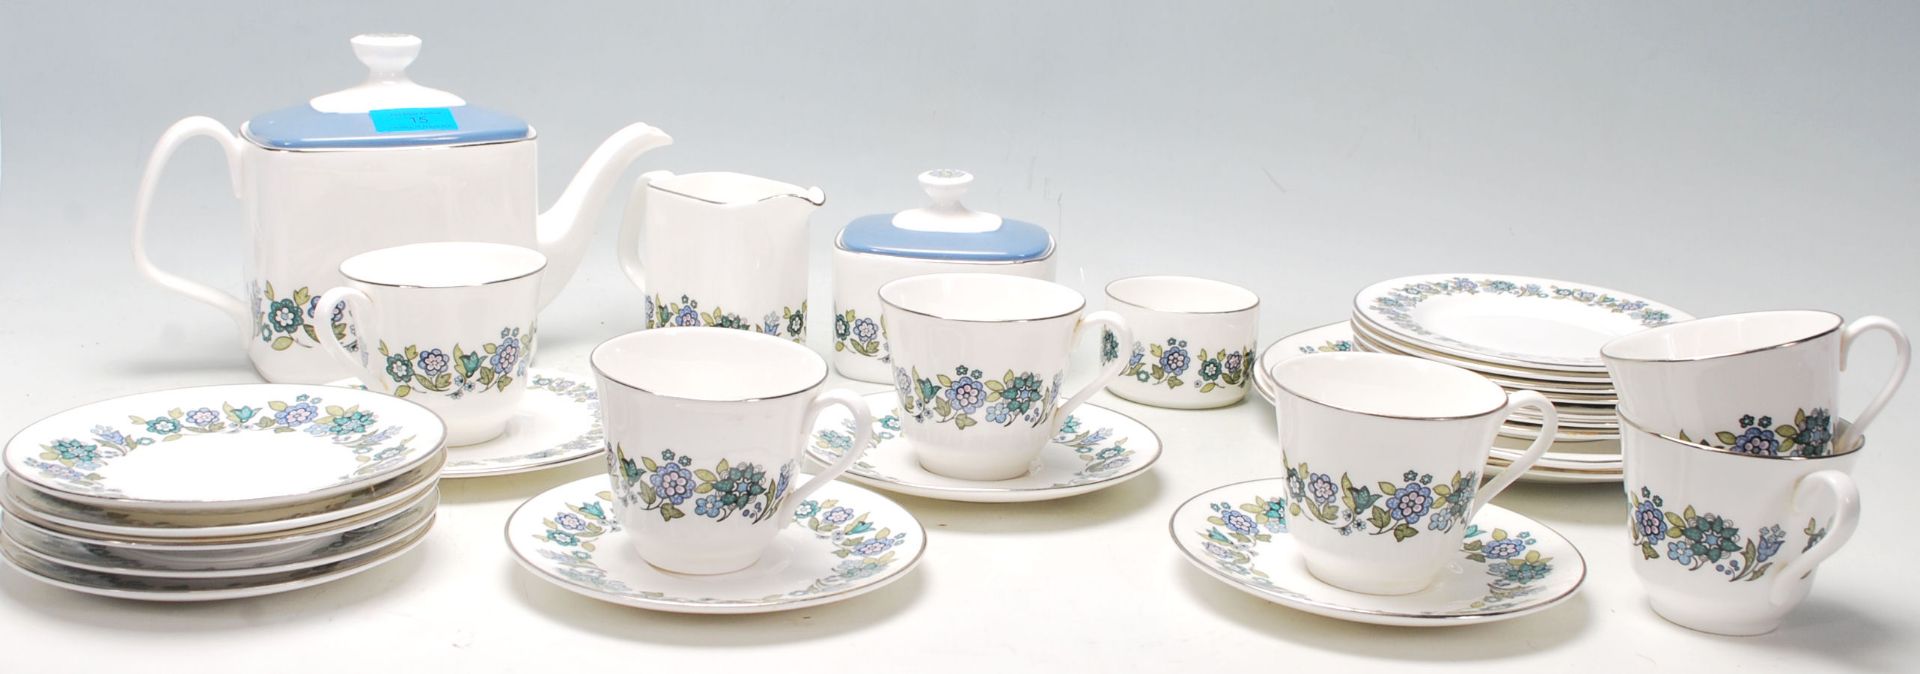 A vintage retro 20th Century Royal Doulton fine bone china tea service comprising of cups,